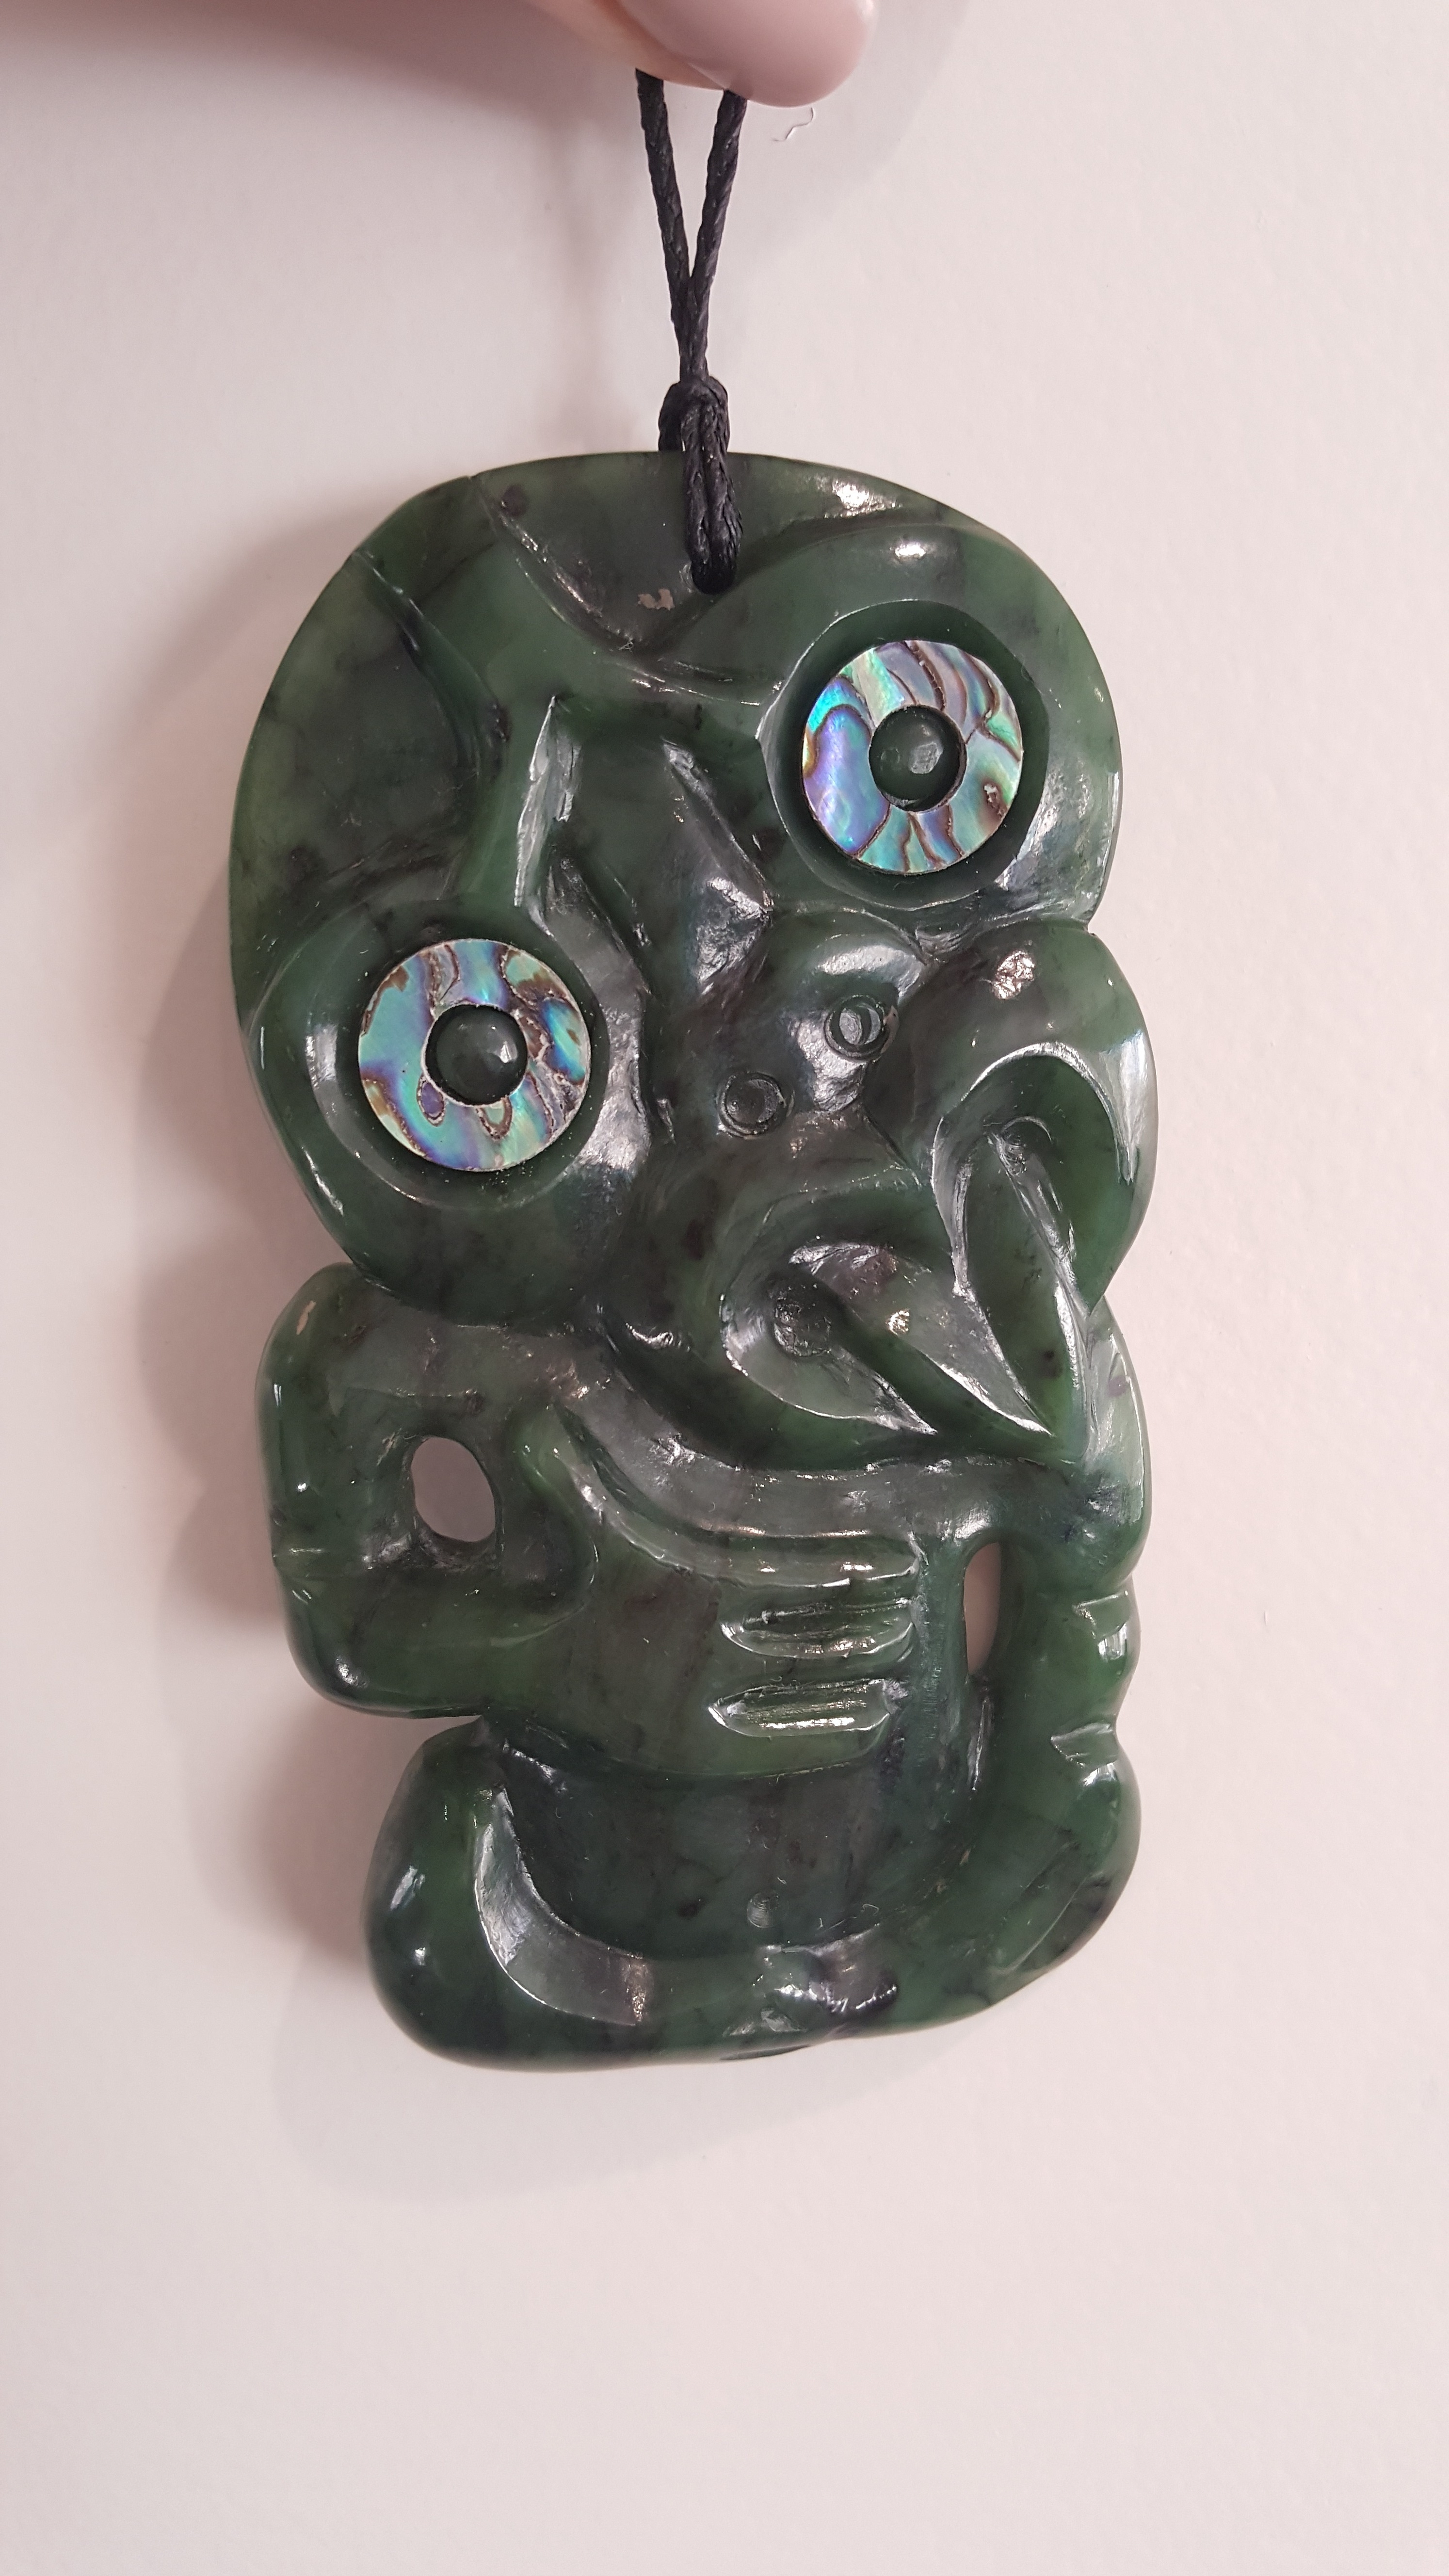 Inlaid Paua Eyes in New Zealand Greenstone